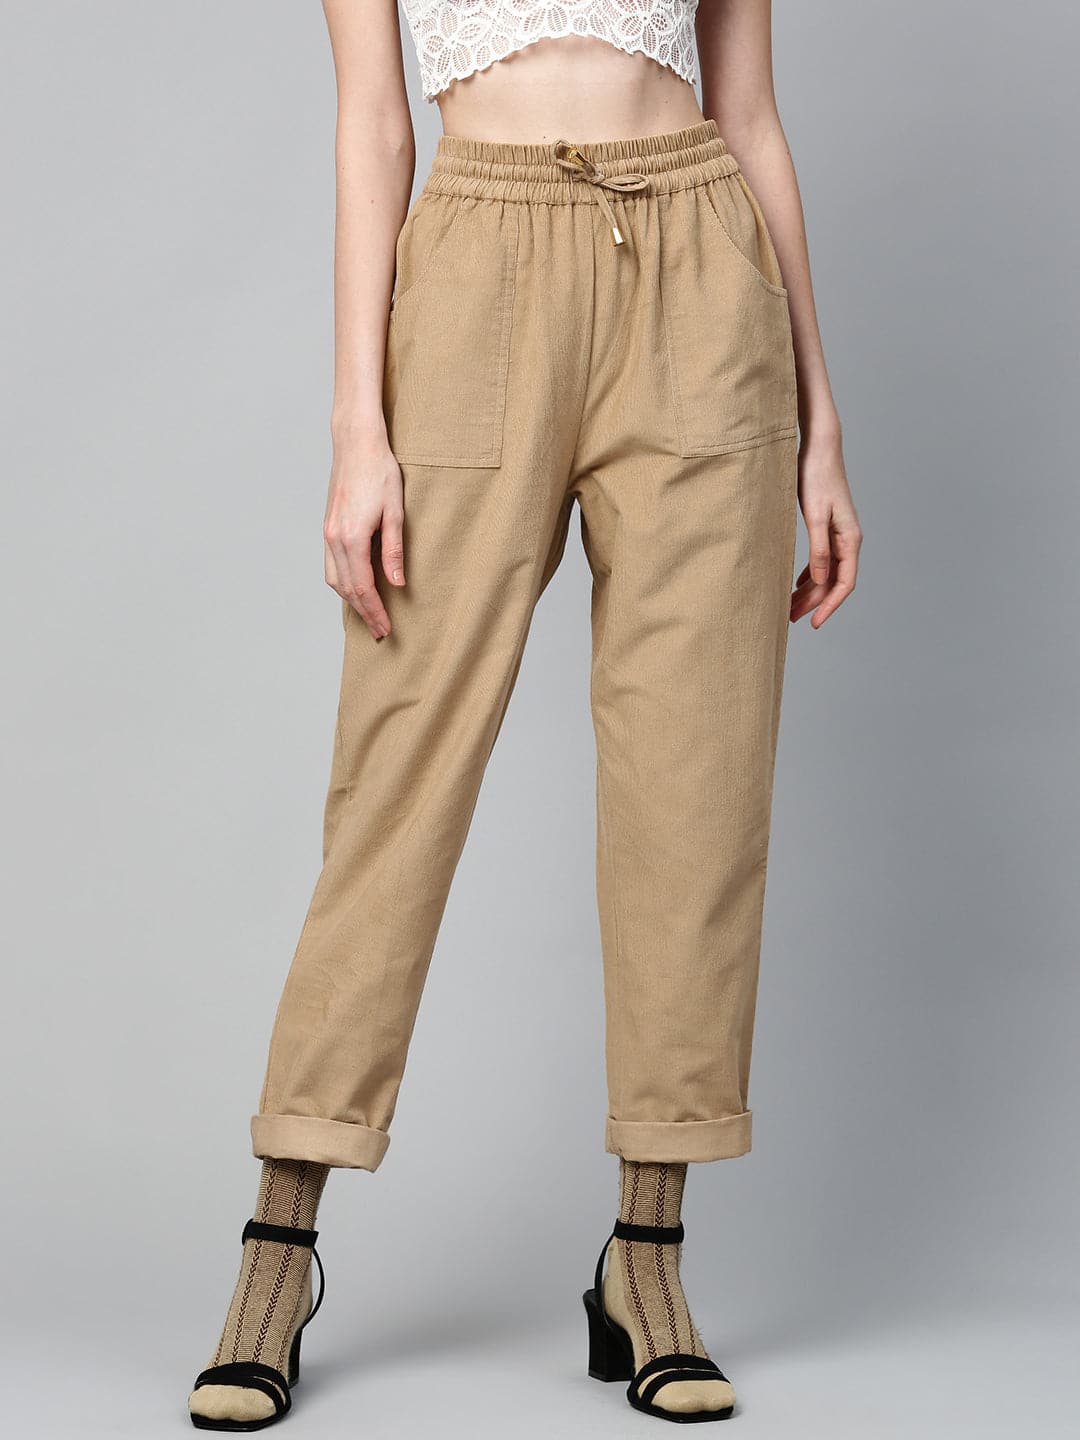 Beige Corduroy Street Style Drawstring Pants-Pants-SASSAFRAS